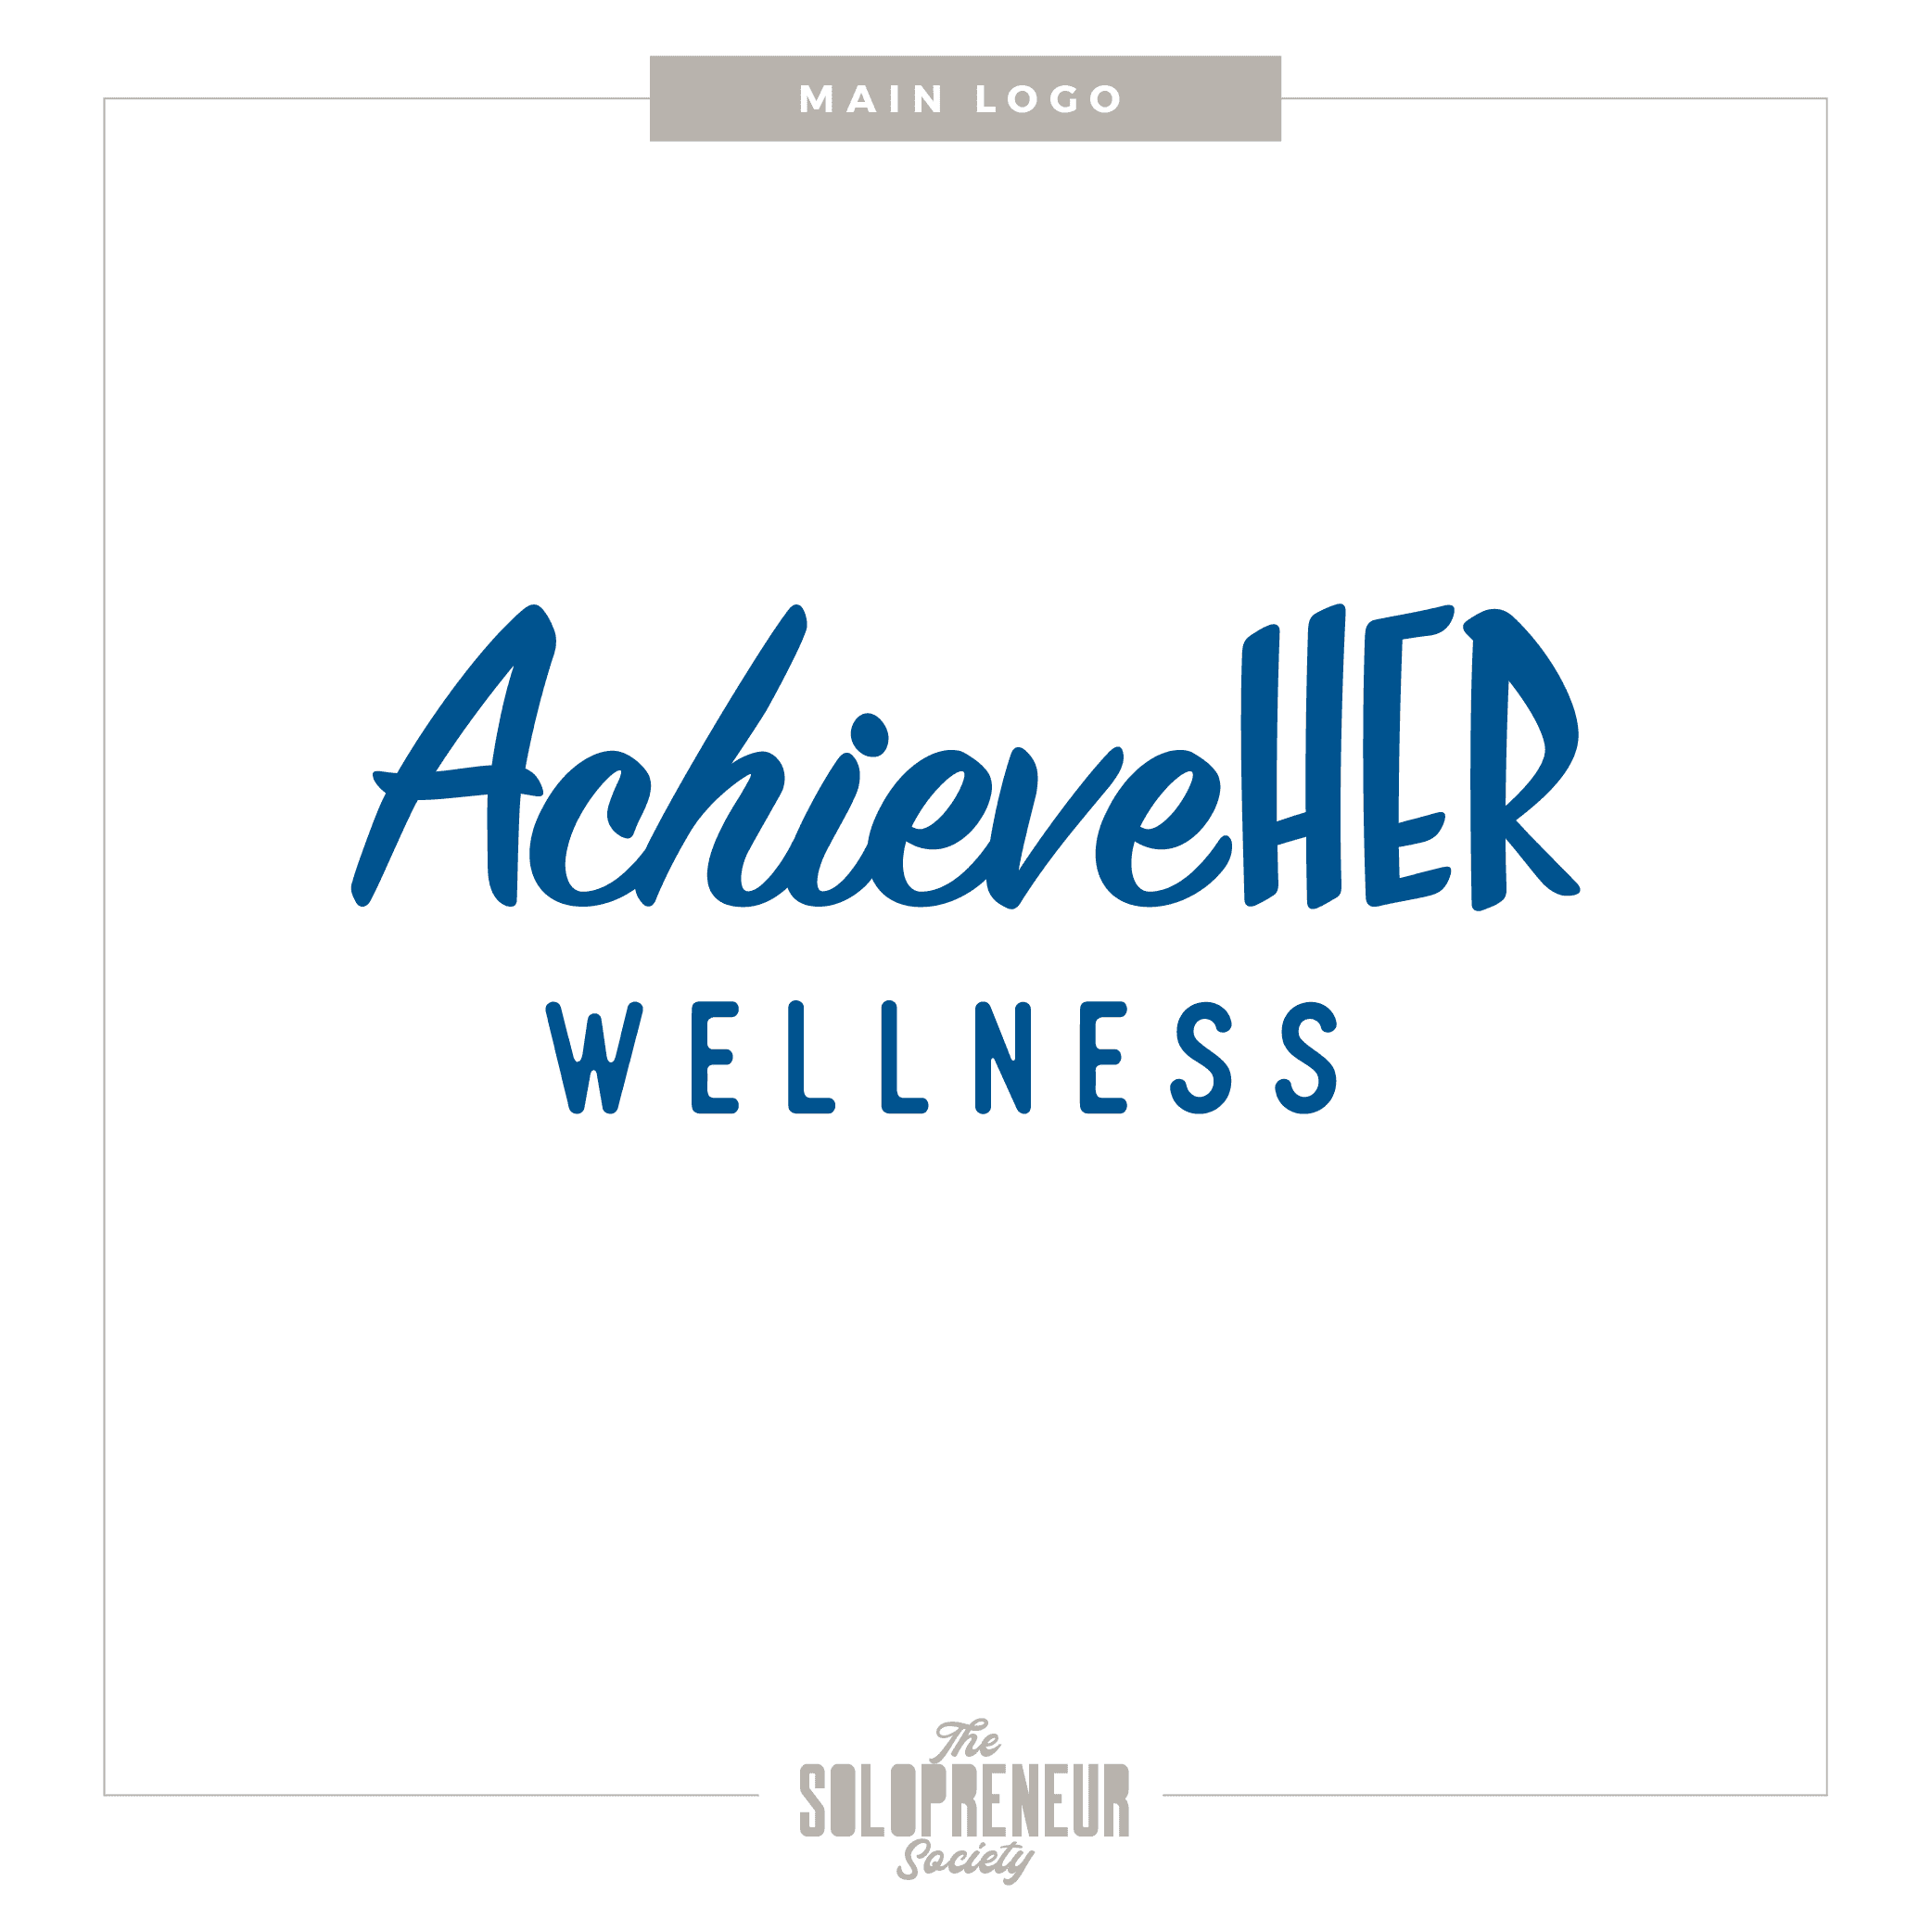 Achieveher Wellness Main Logo